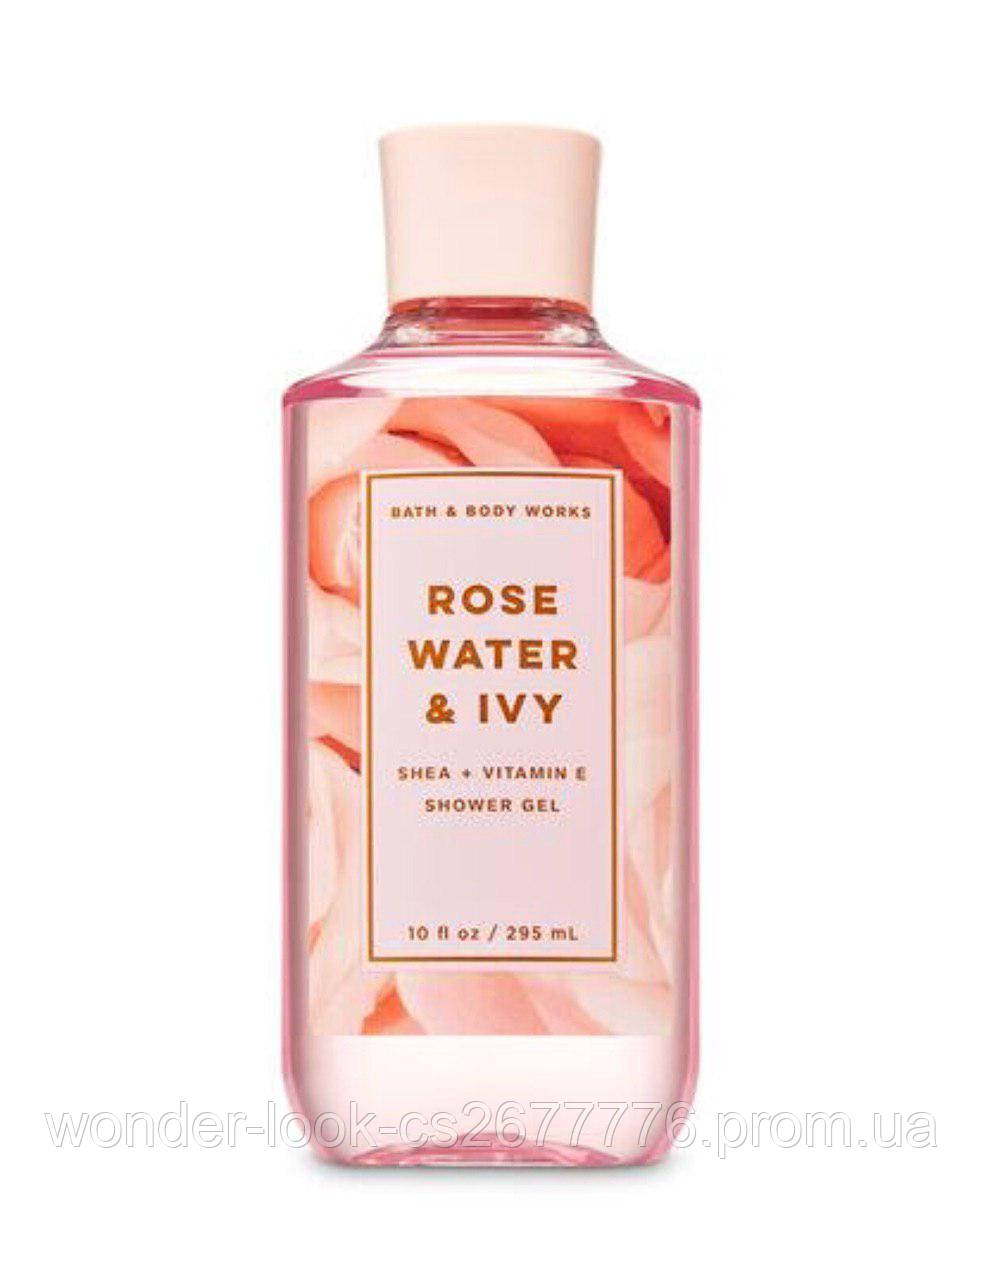 Увлажняющий гель для душа Bath & Body Works Rose Water Ivy. 